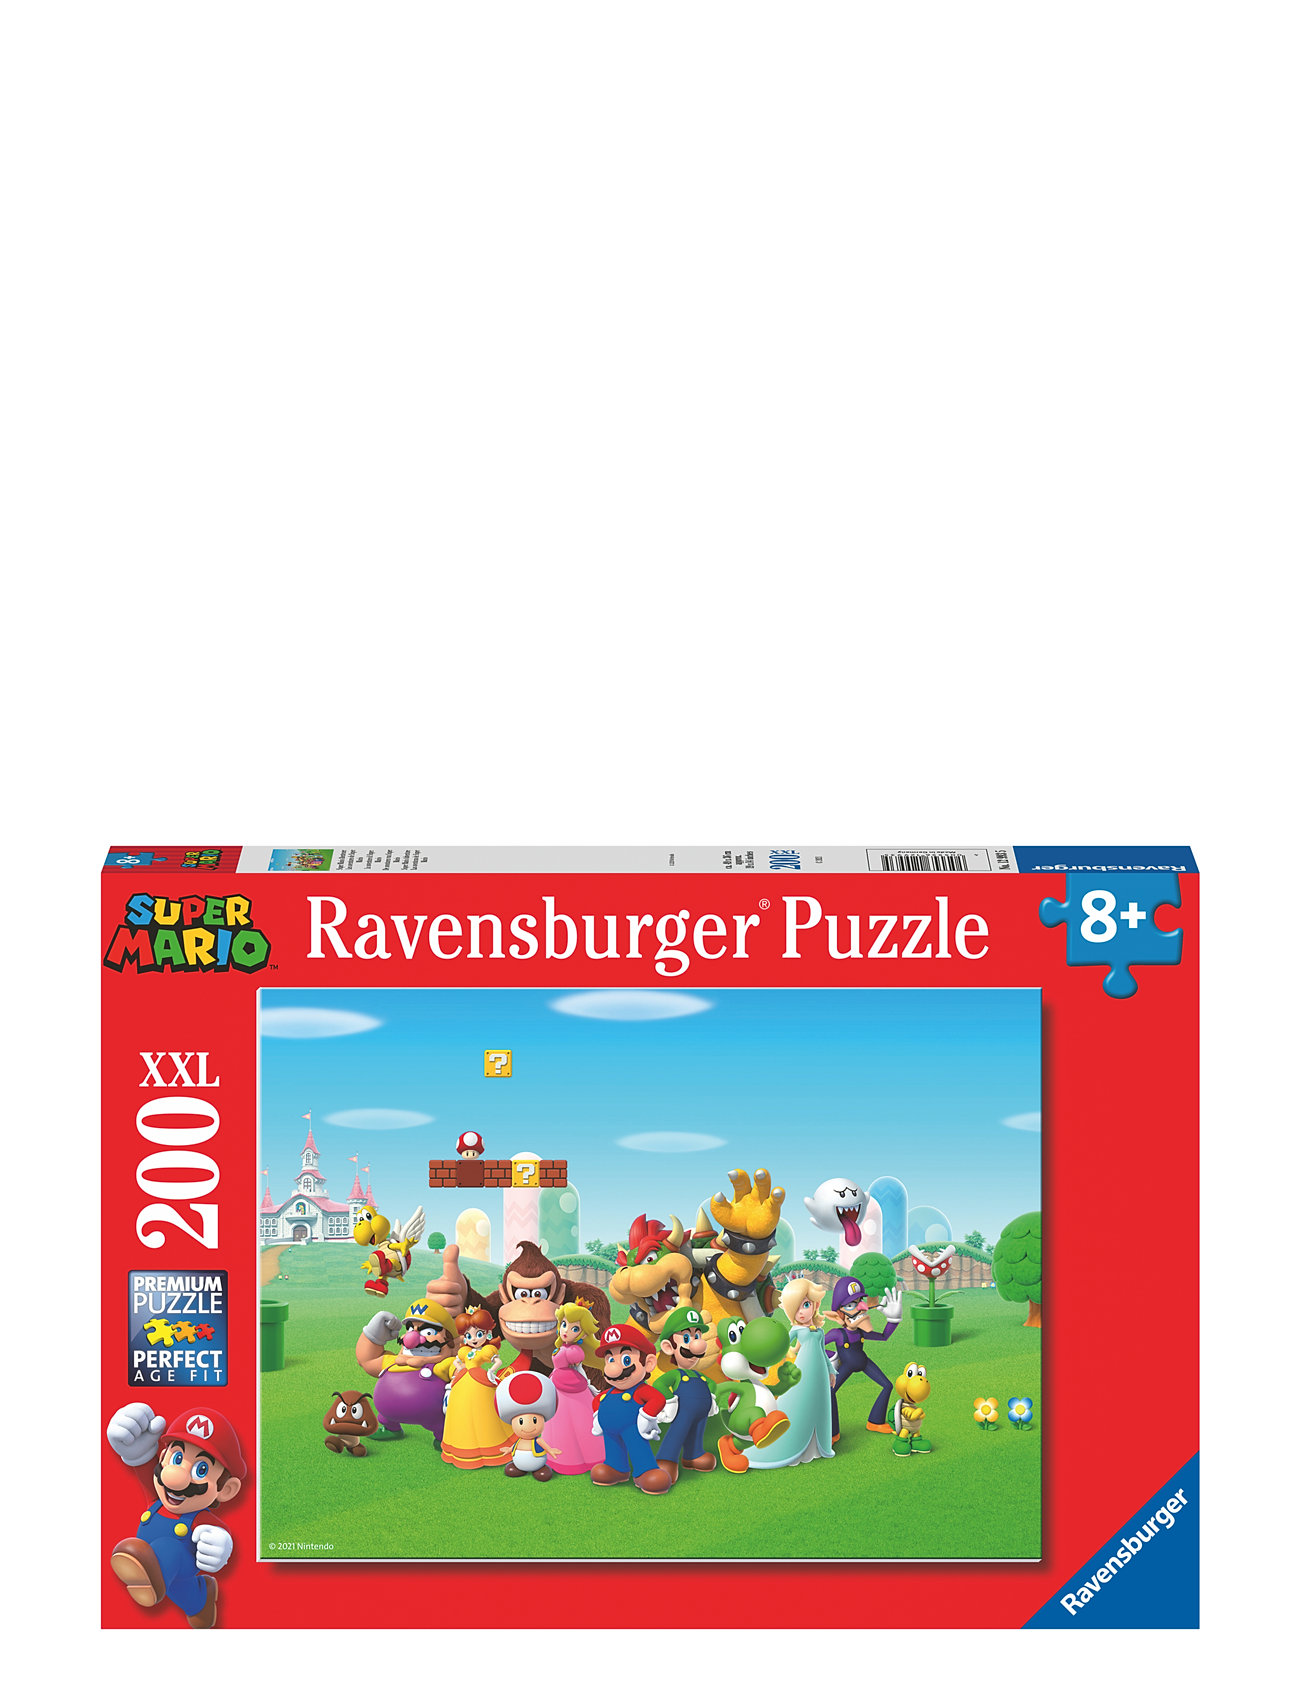 Super Mario Adventure 200P Toys Puzzles And Games Puzzles Classic Puzzles Multi/patterned Ravensburger